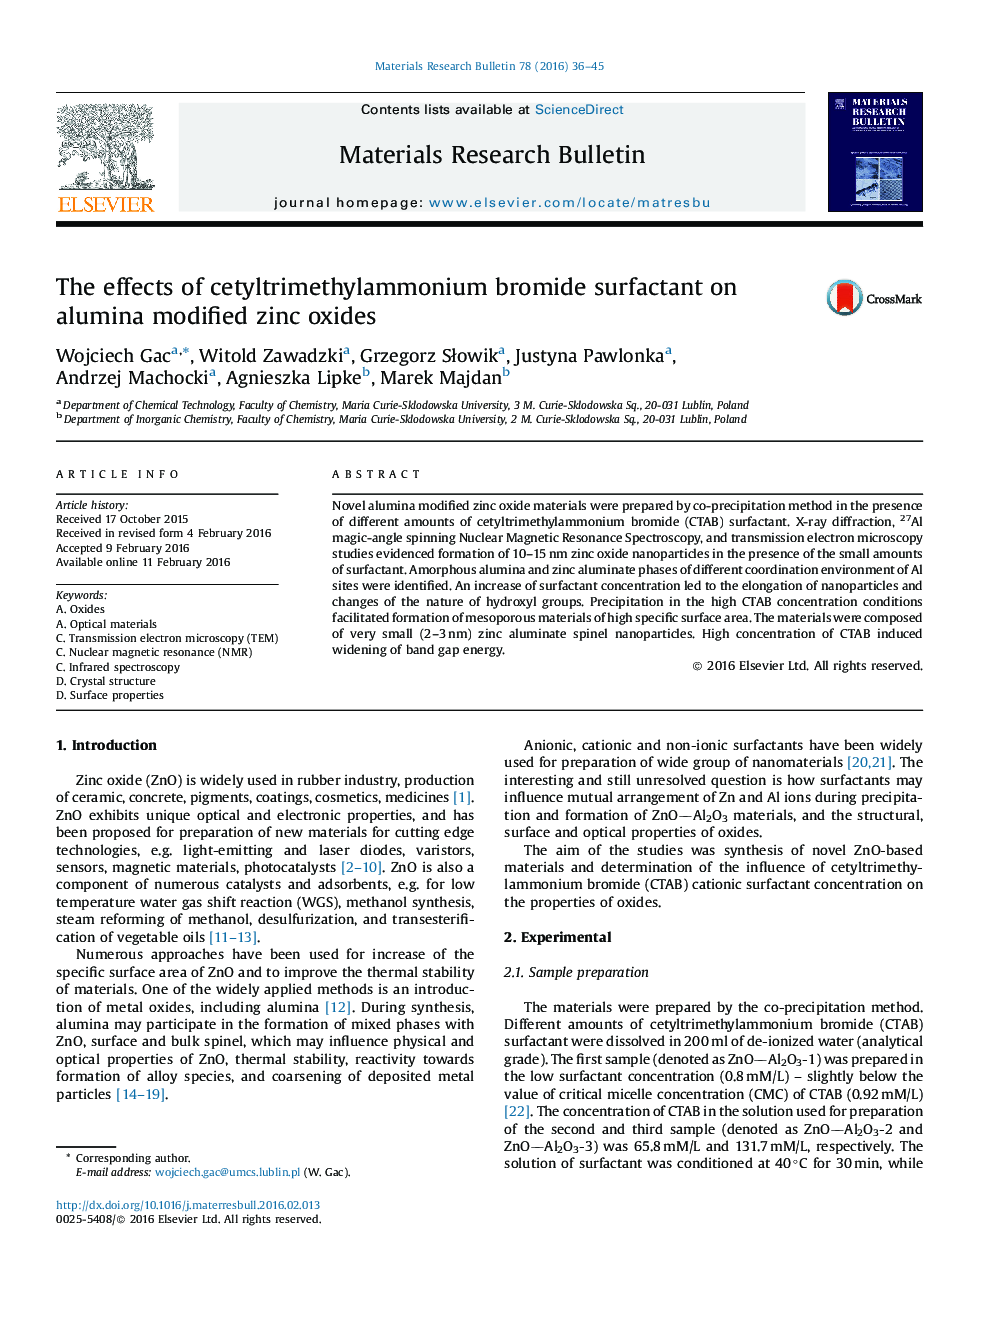 The effects of cetyltrimethylammonium bromide surfactant on alumina modified zinc oxides